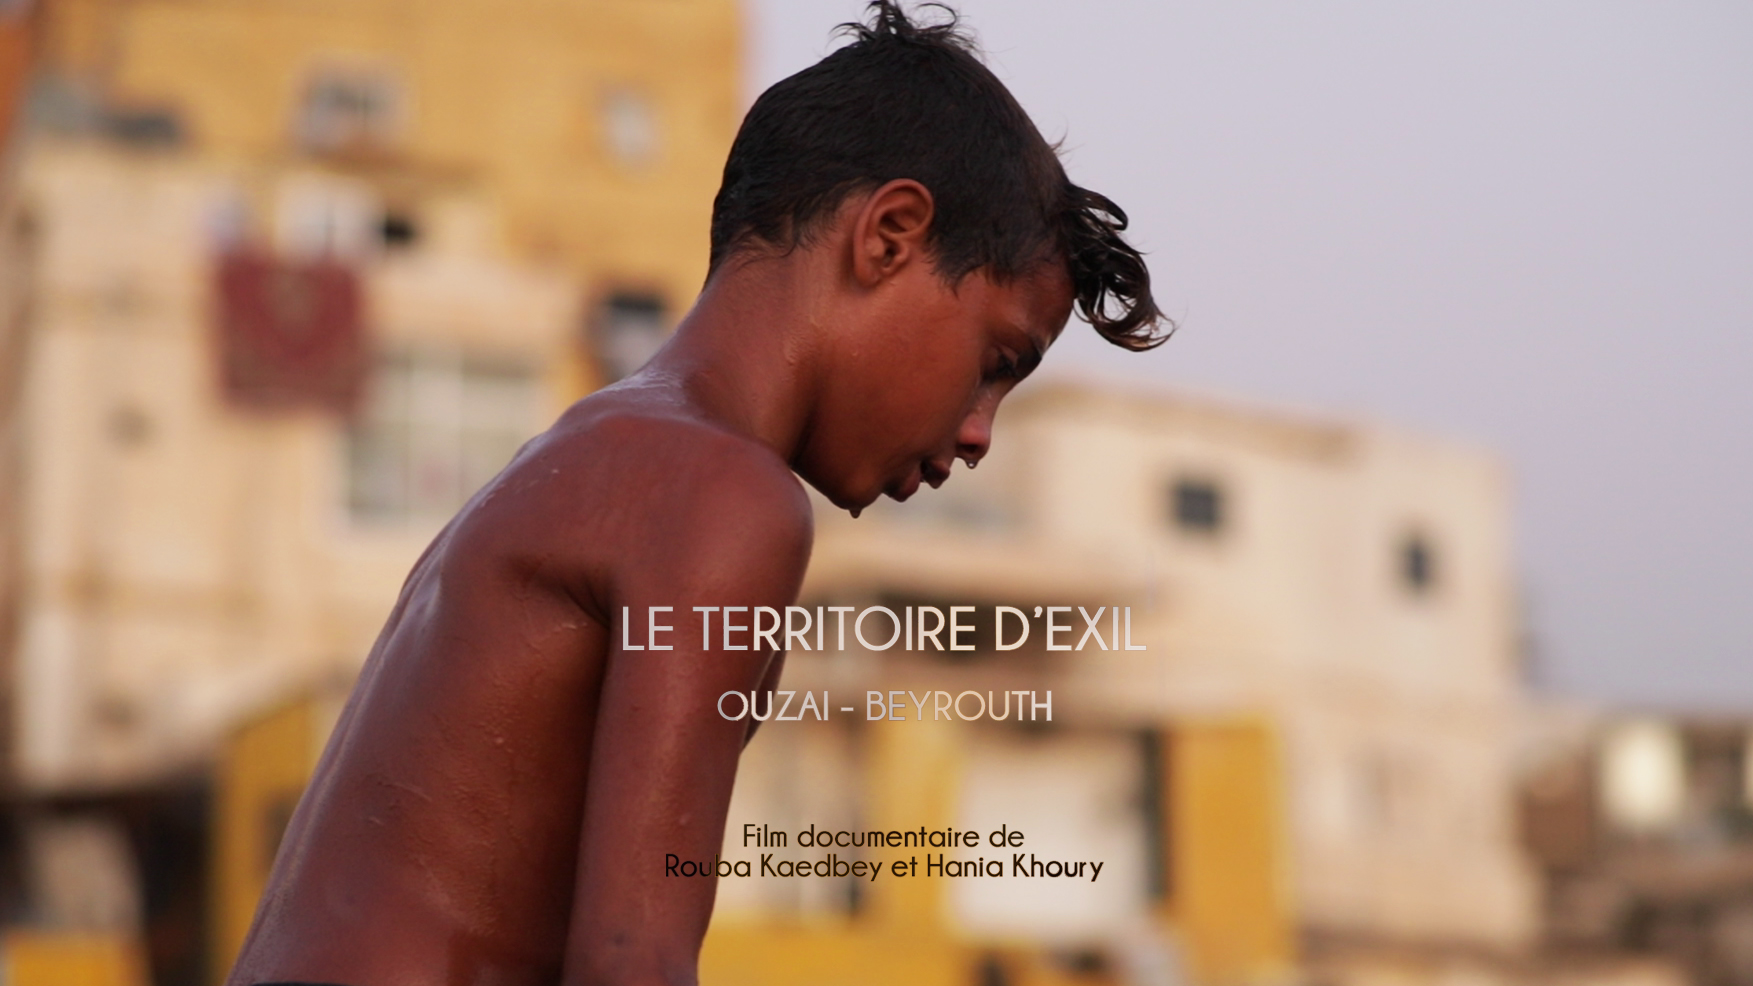 Le territoire d’exil. Ouzai, Beyrouth (trailer)